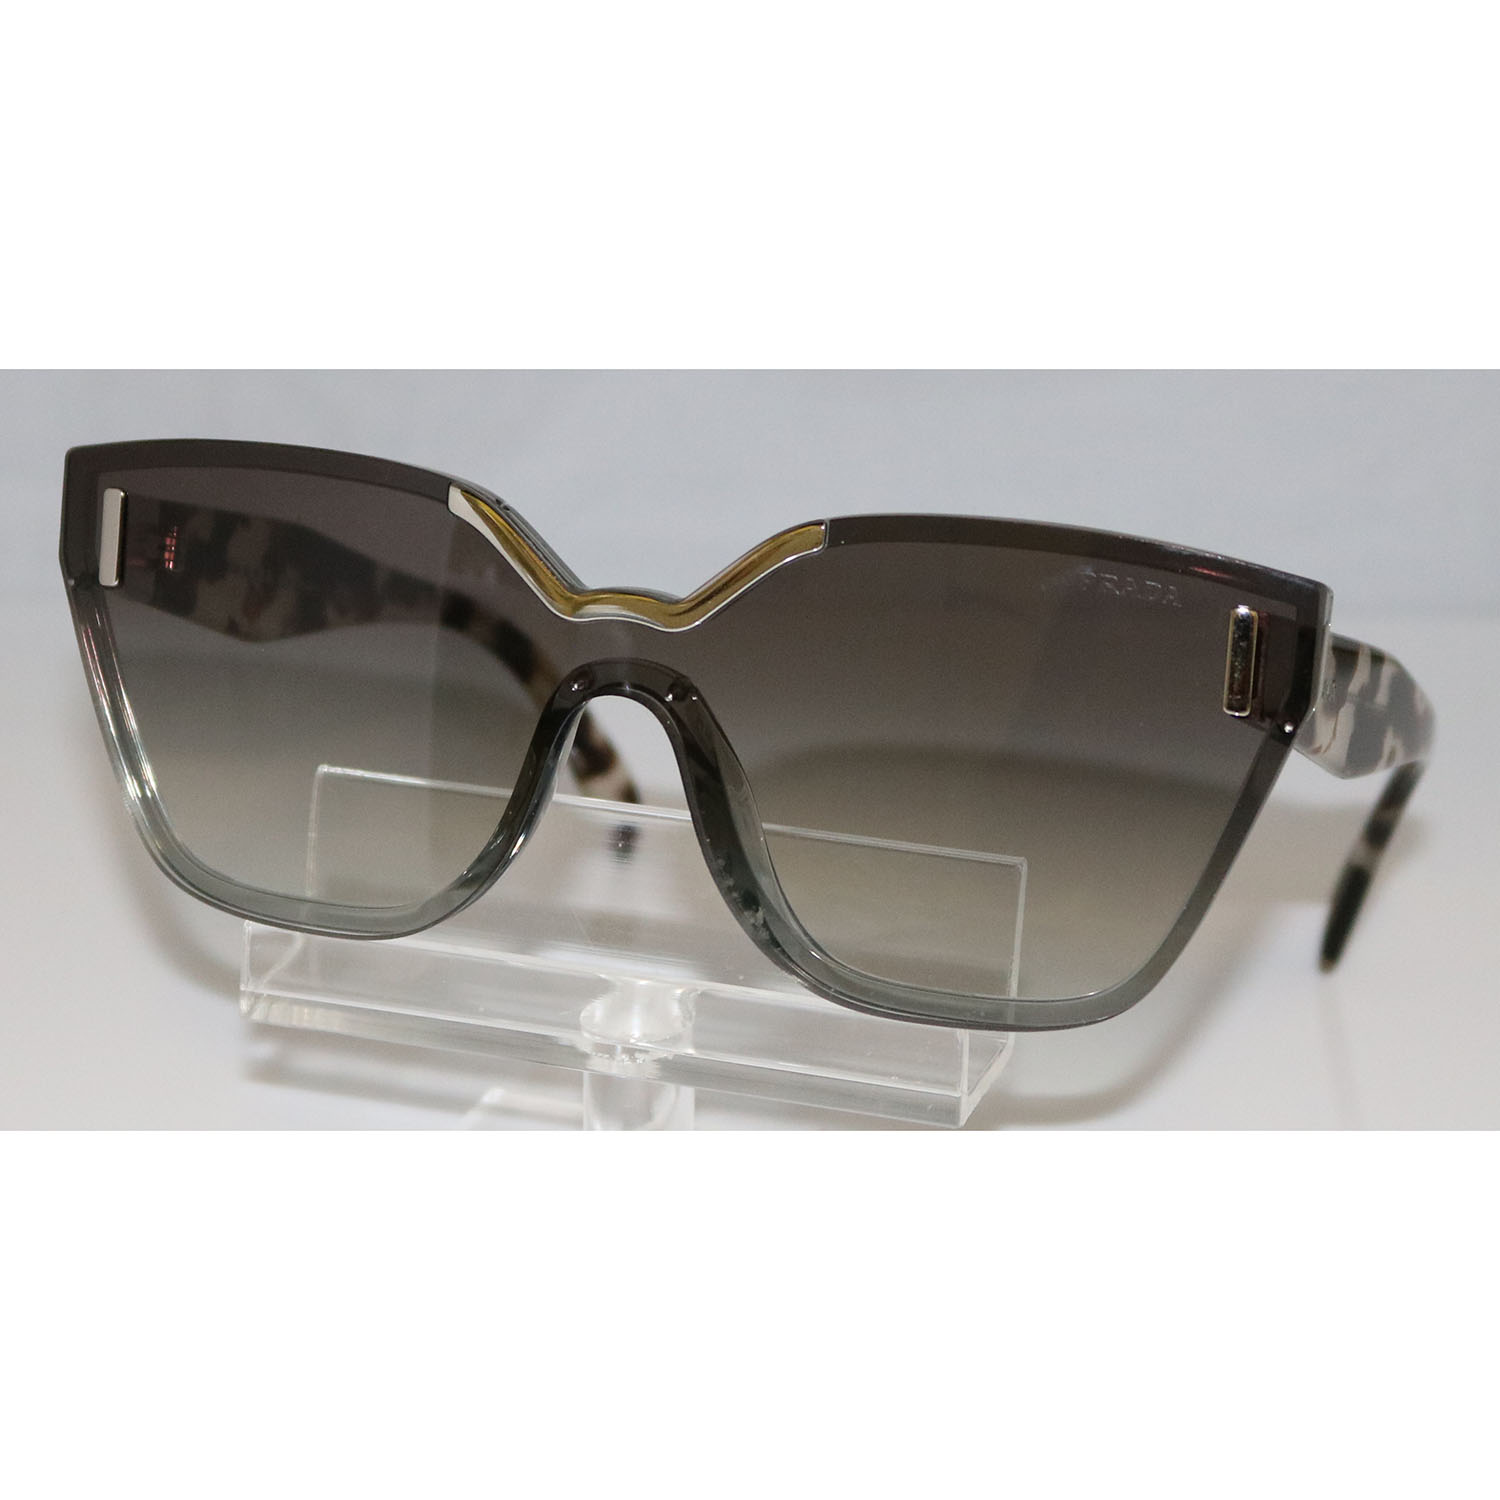 PRADA SPR 16T VIP-0A7 Light Tortoise Sunglasses